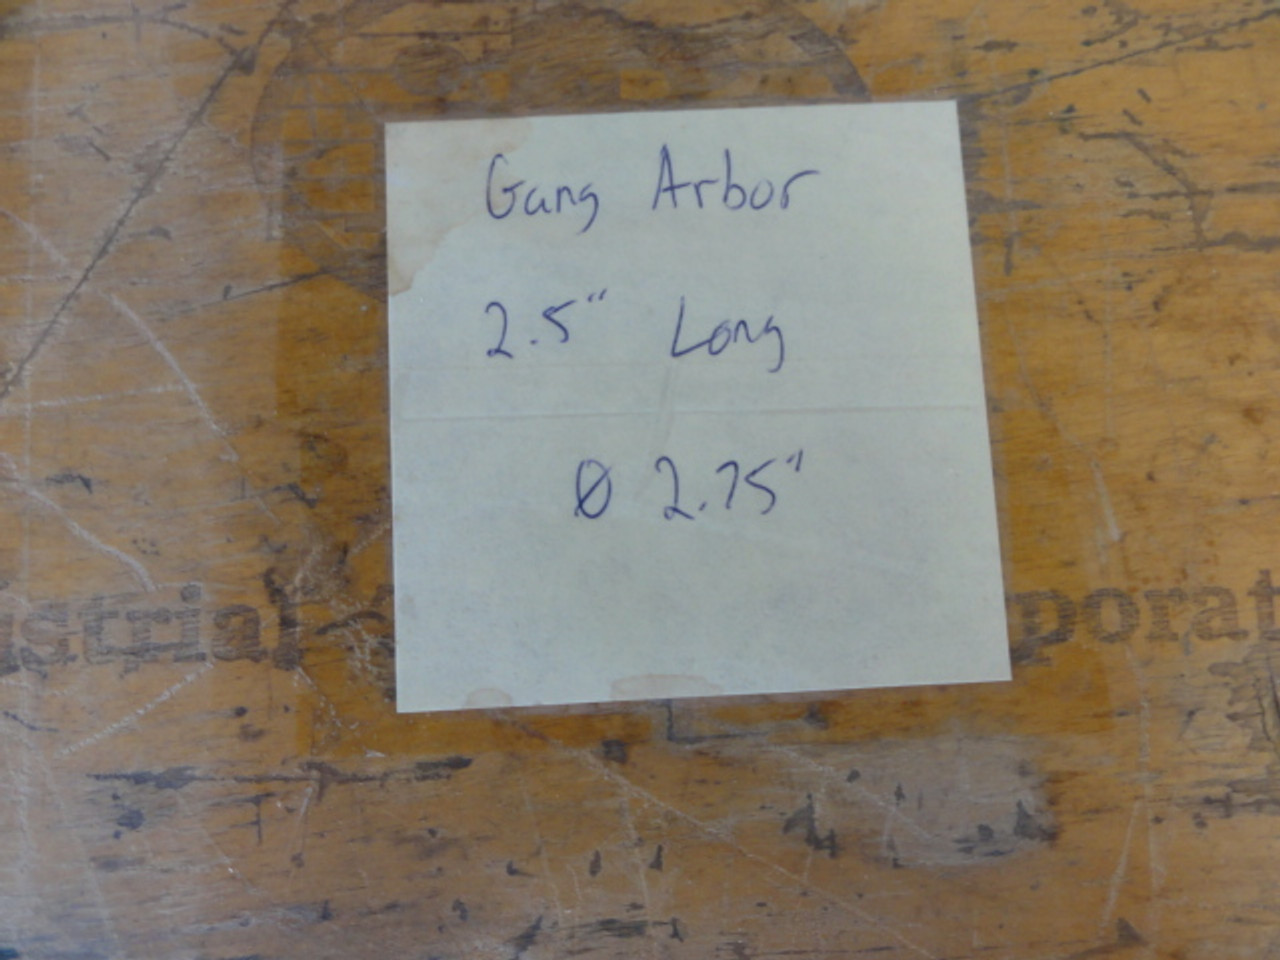 MTI / Norton Dicing Saw 02.75" Gang Arbor, 2.5" Long w/ Box